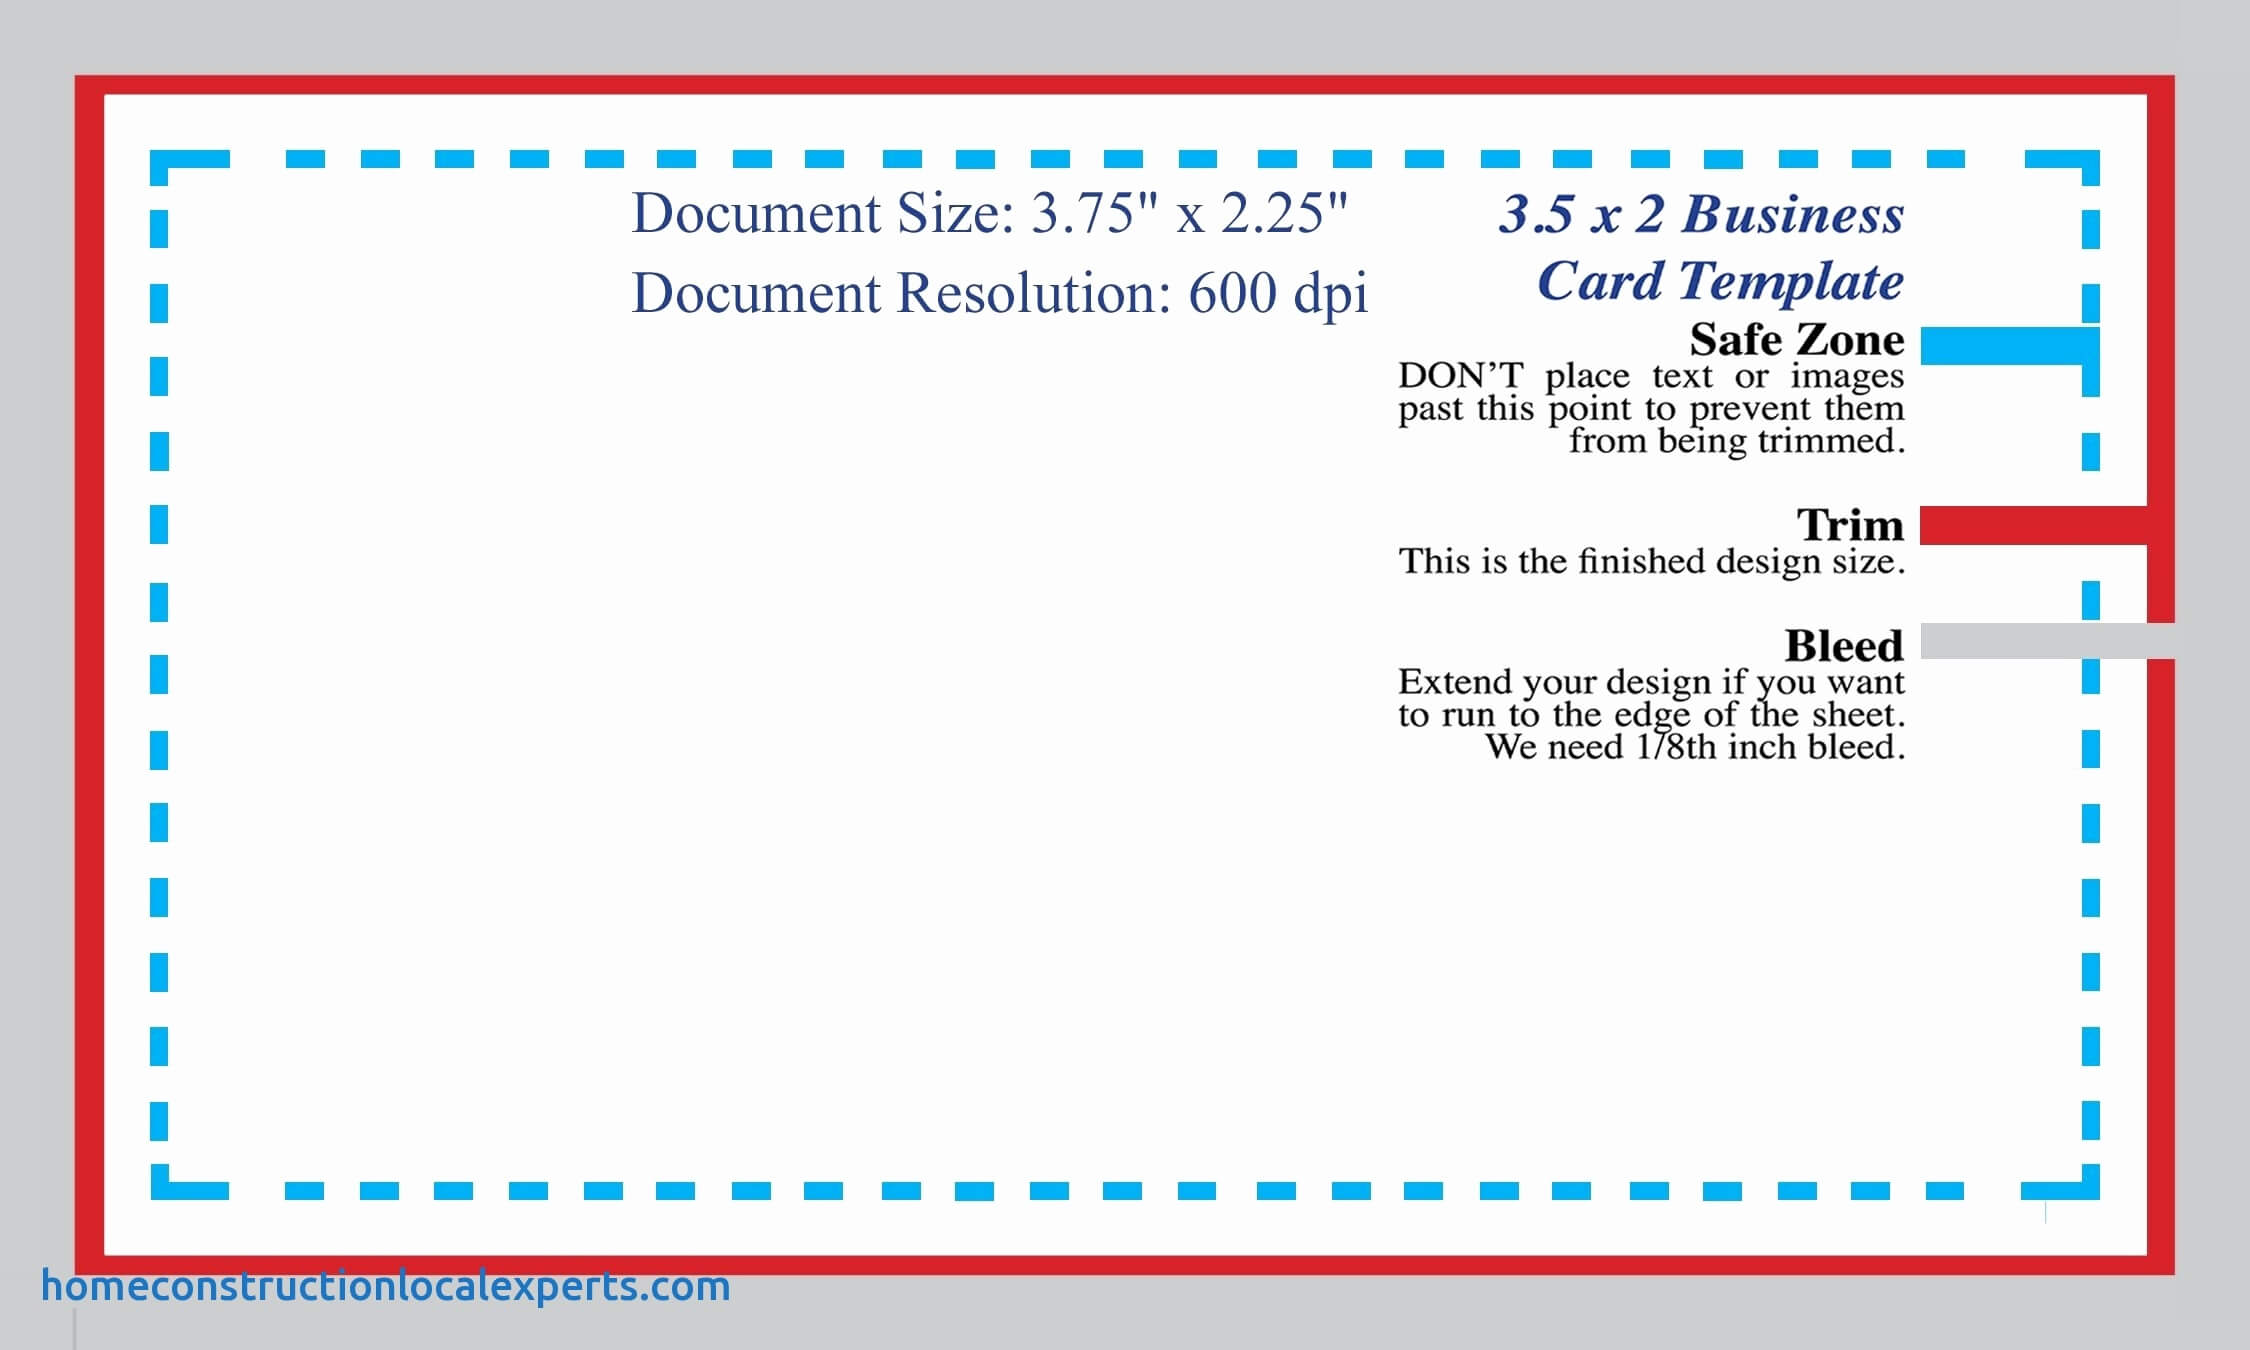 Business Card Font Size Letters Smallest Legible Standards Regarding Business Card Template Size Photoshop